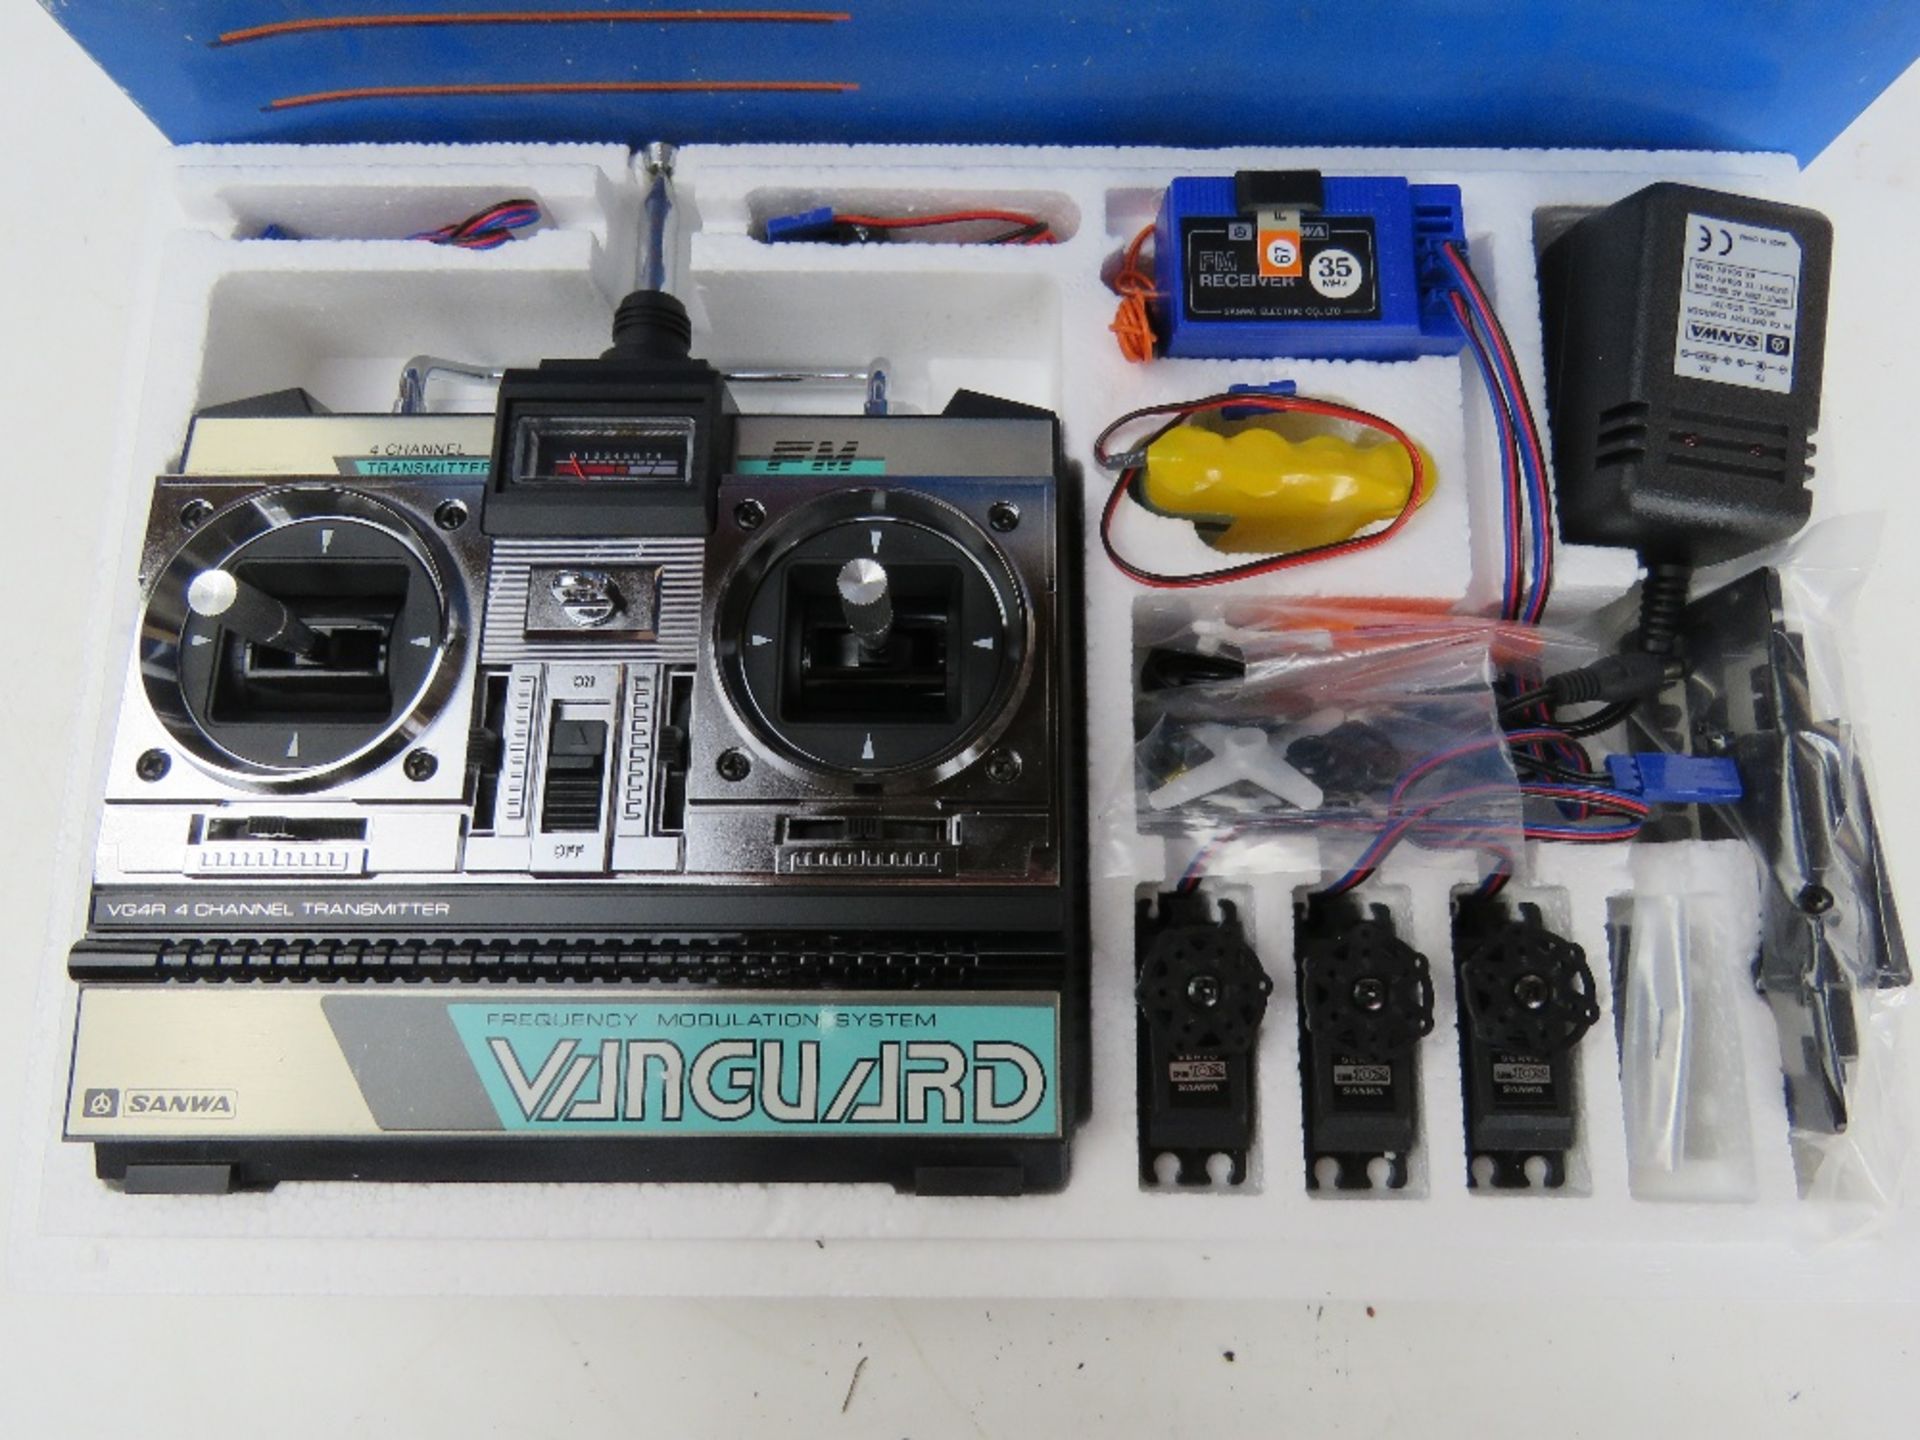 A Vanguard digital proportional radio control system. In original box. - Image 2 of 2